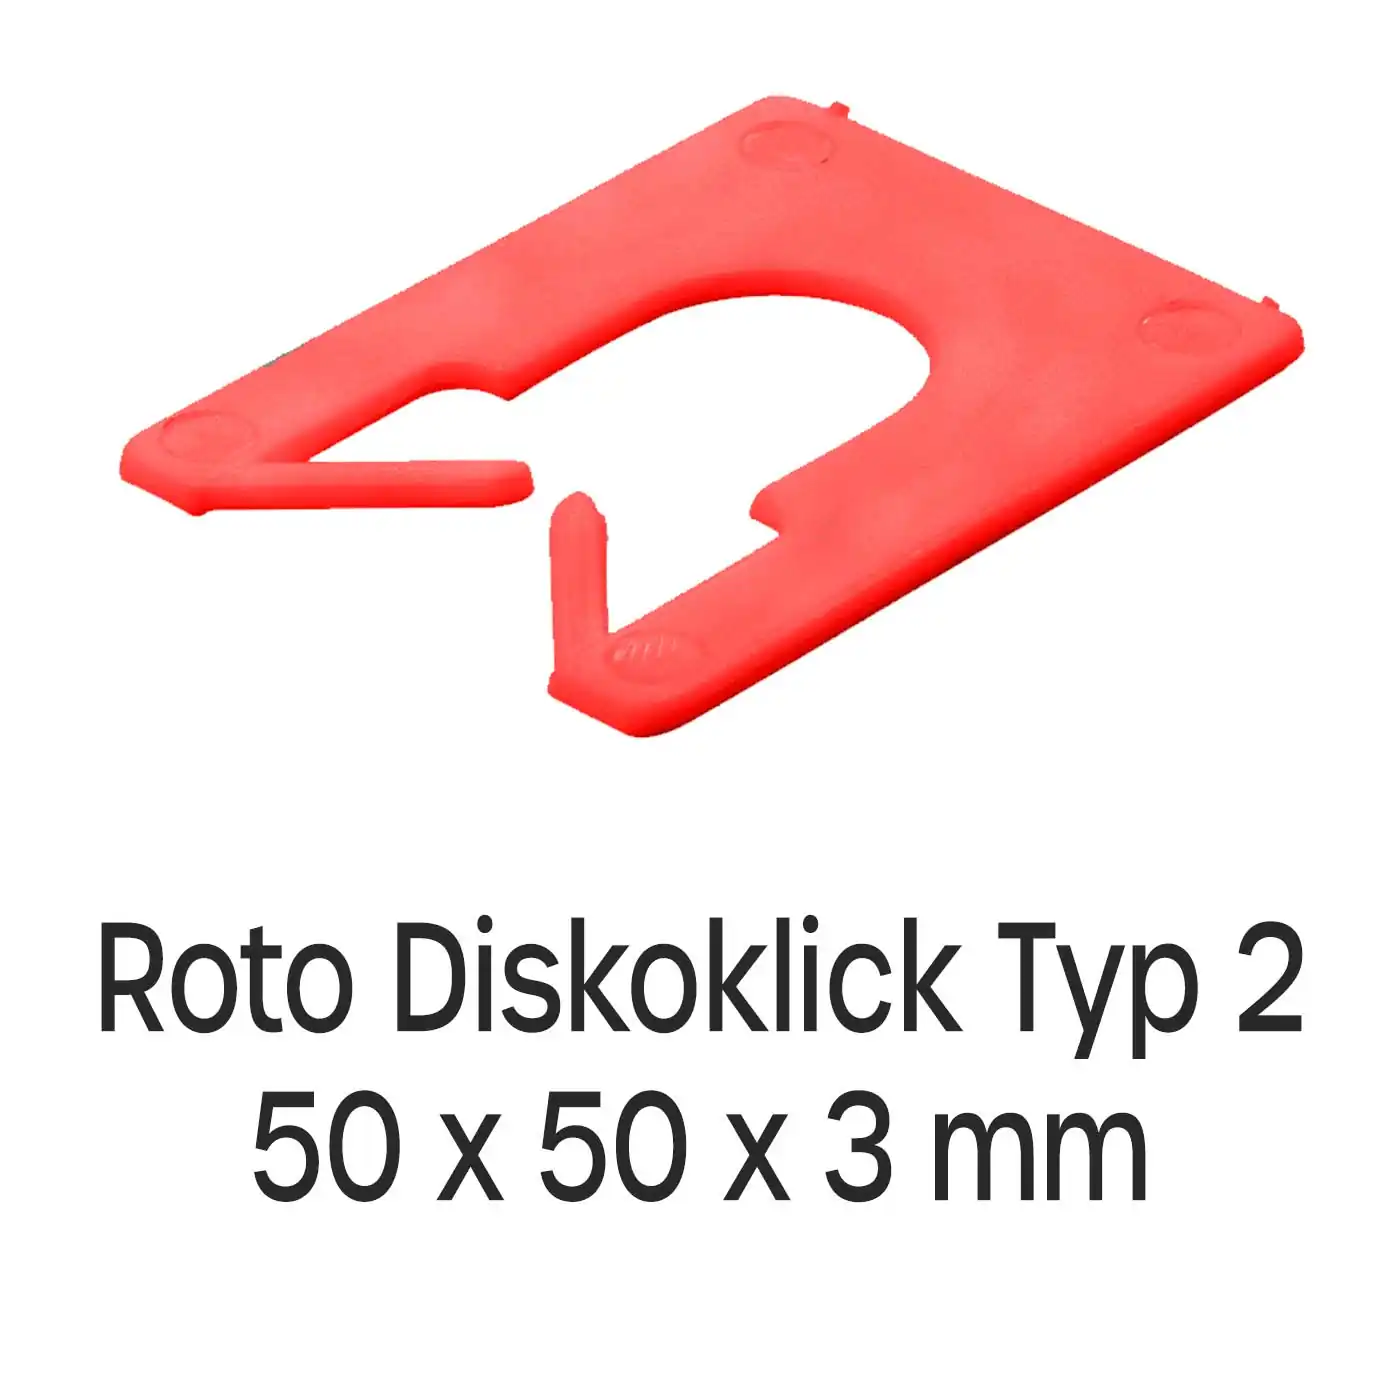 Distanzplatten Roto Diskoklick Typ 2 50 x 50 x 3 mm 1000 Stück